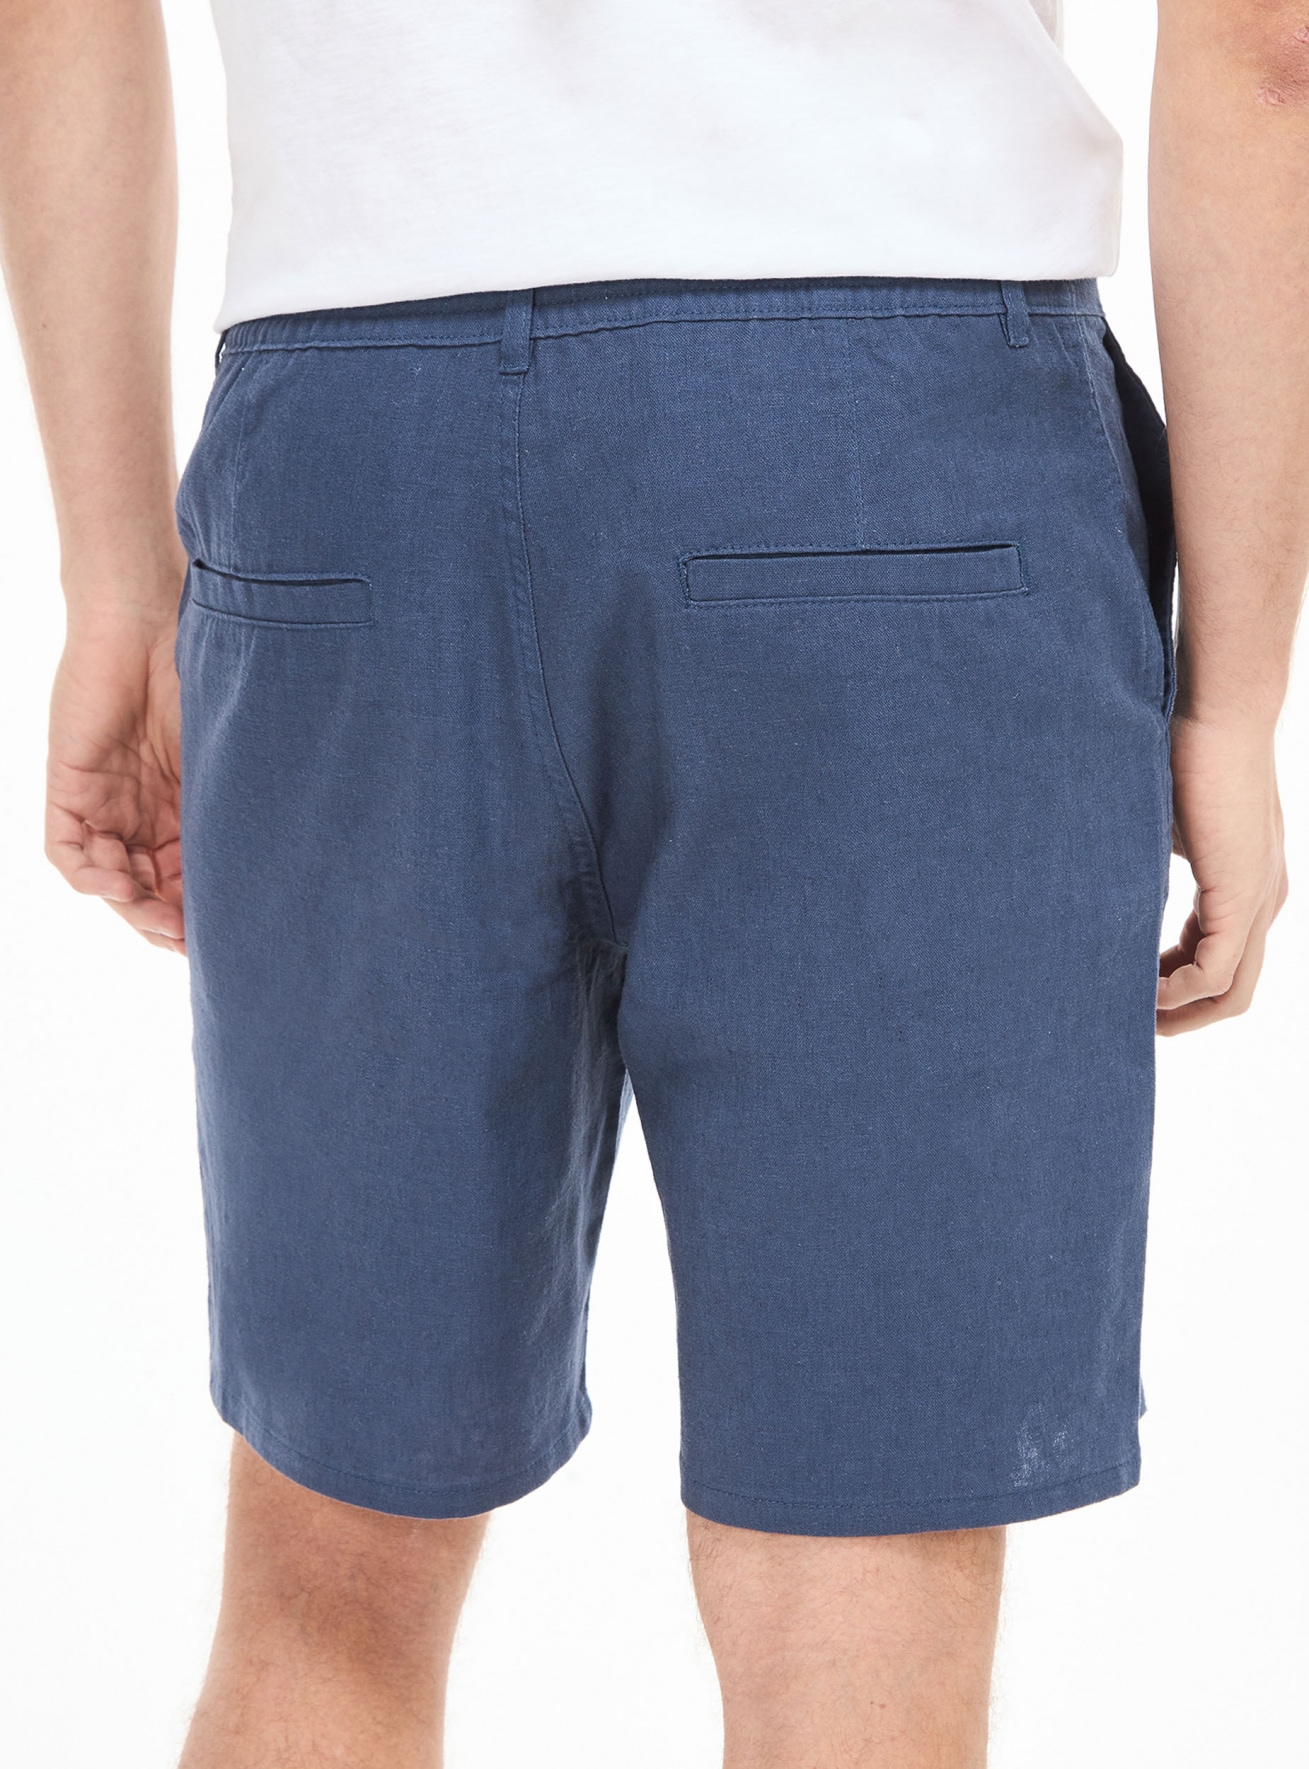 Pantalones cortos Hombre Terranova